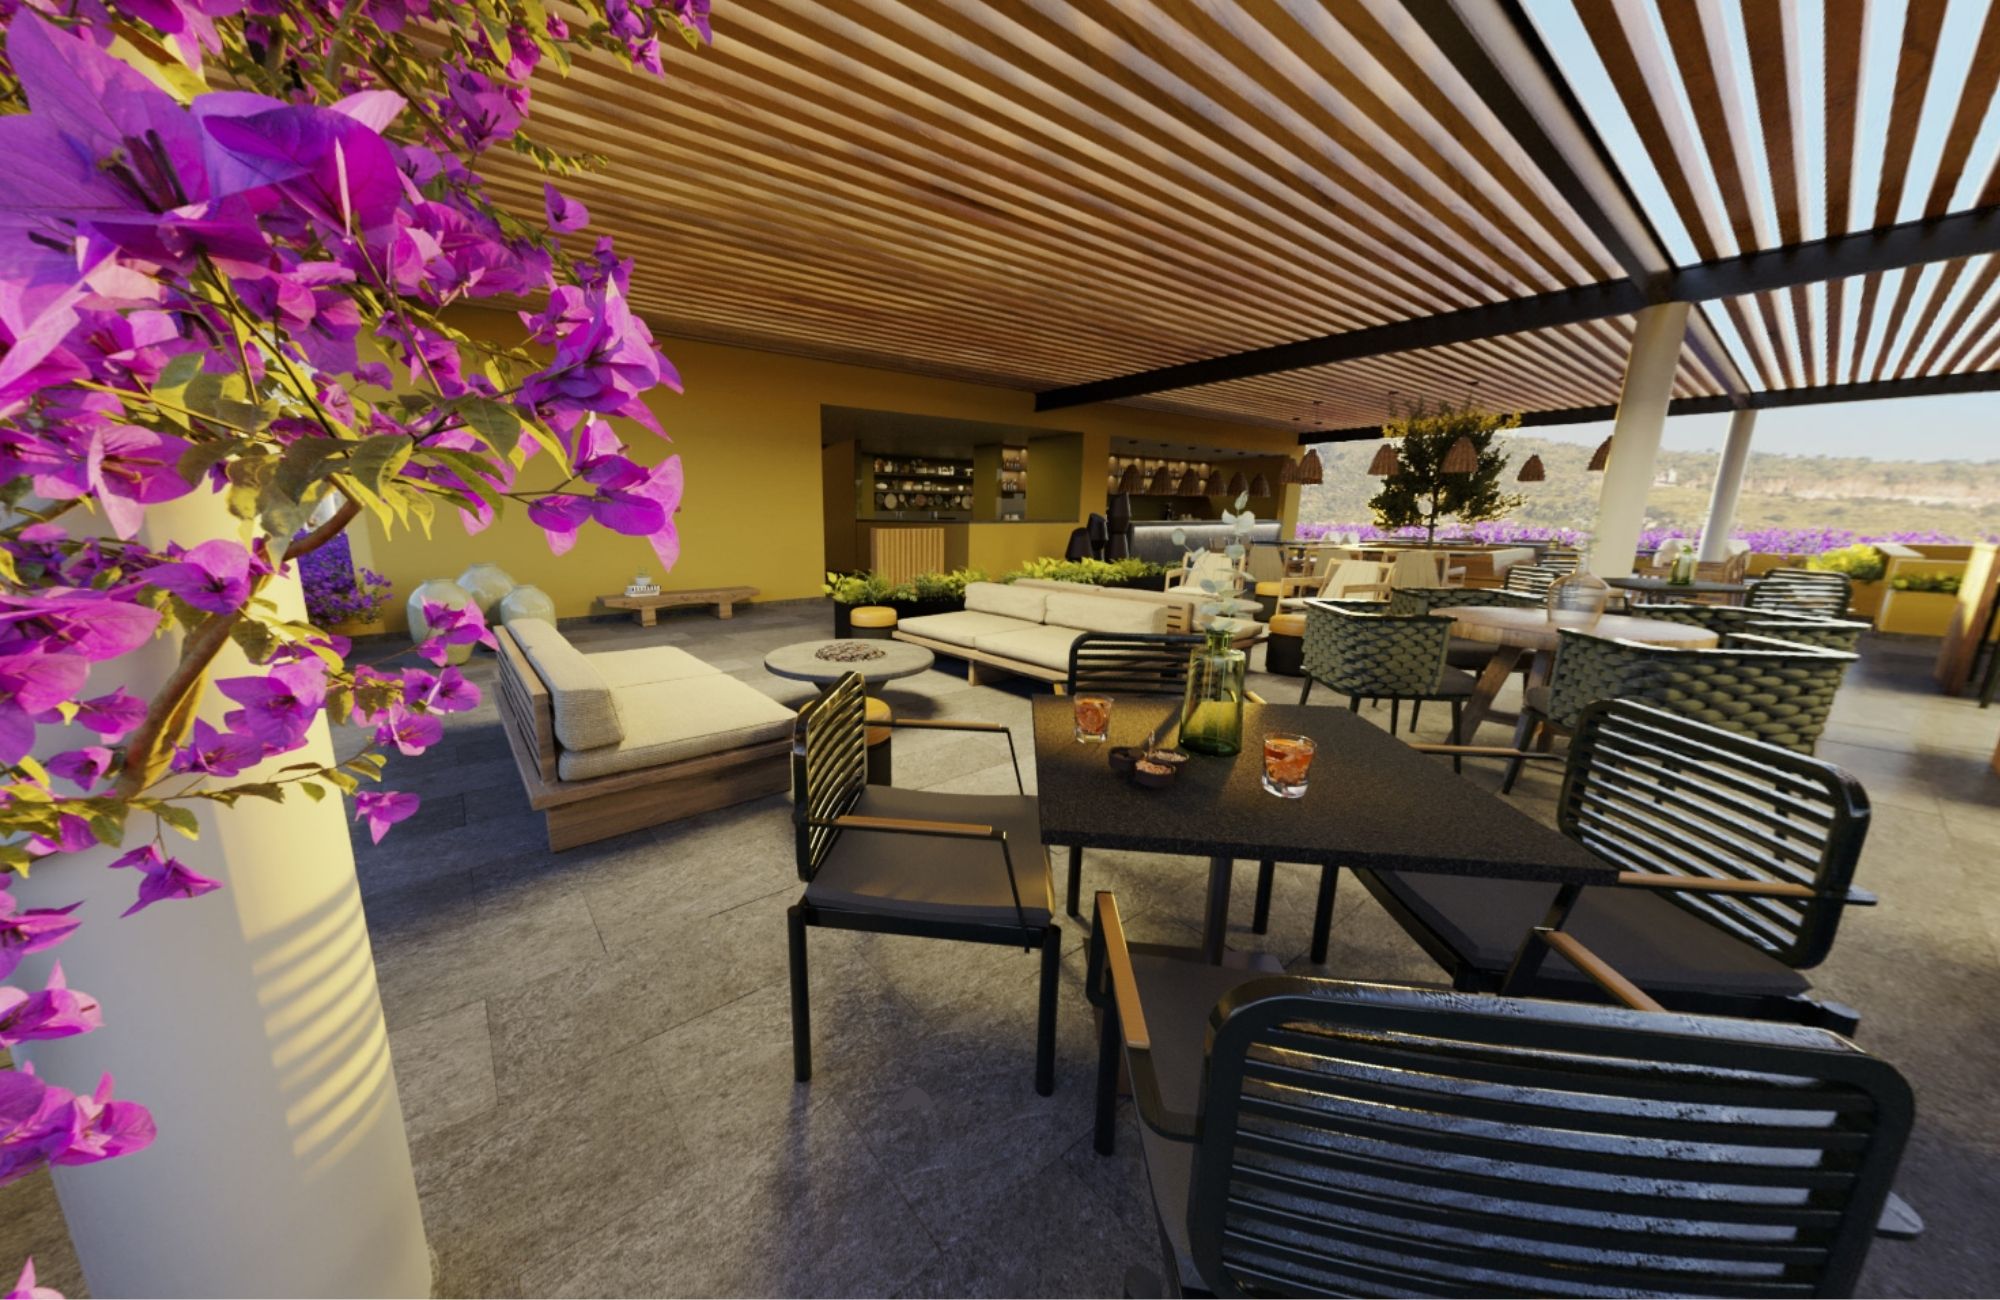 Luxury apartment, private terrace, pool, spa, for sale San Miguel de Allende.